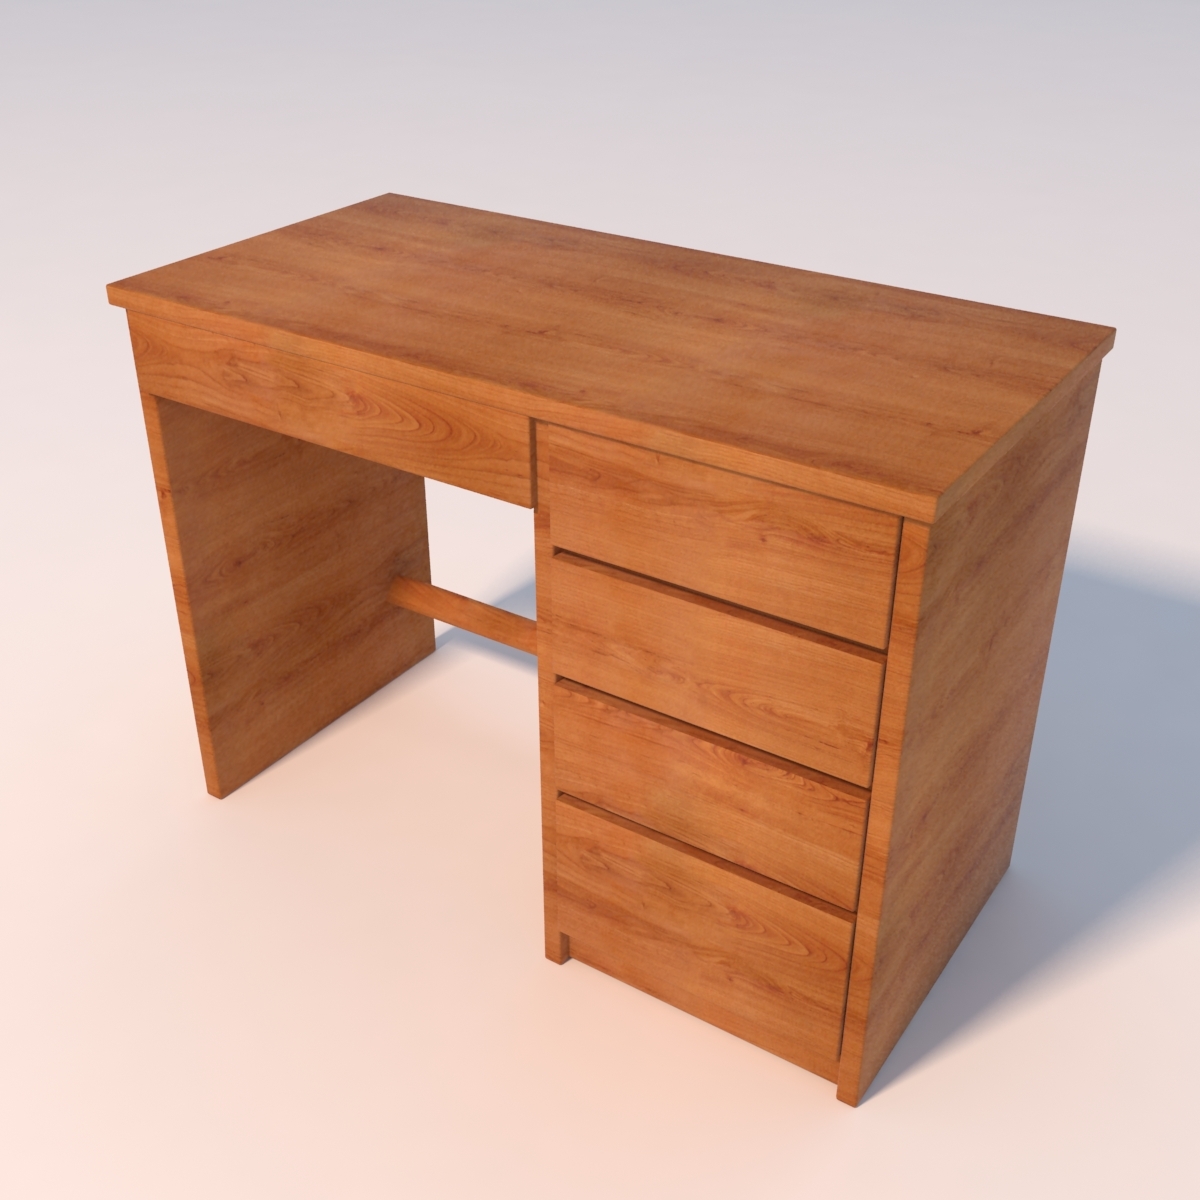 3ds Max Small Wooden Desk